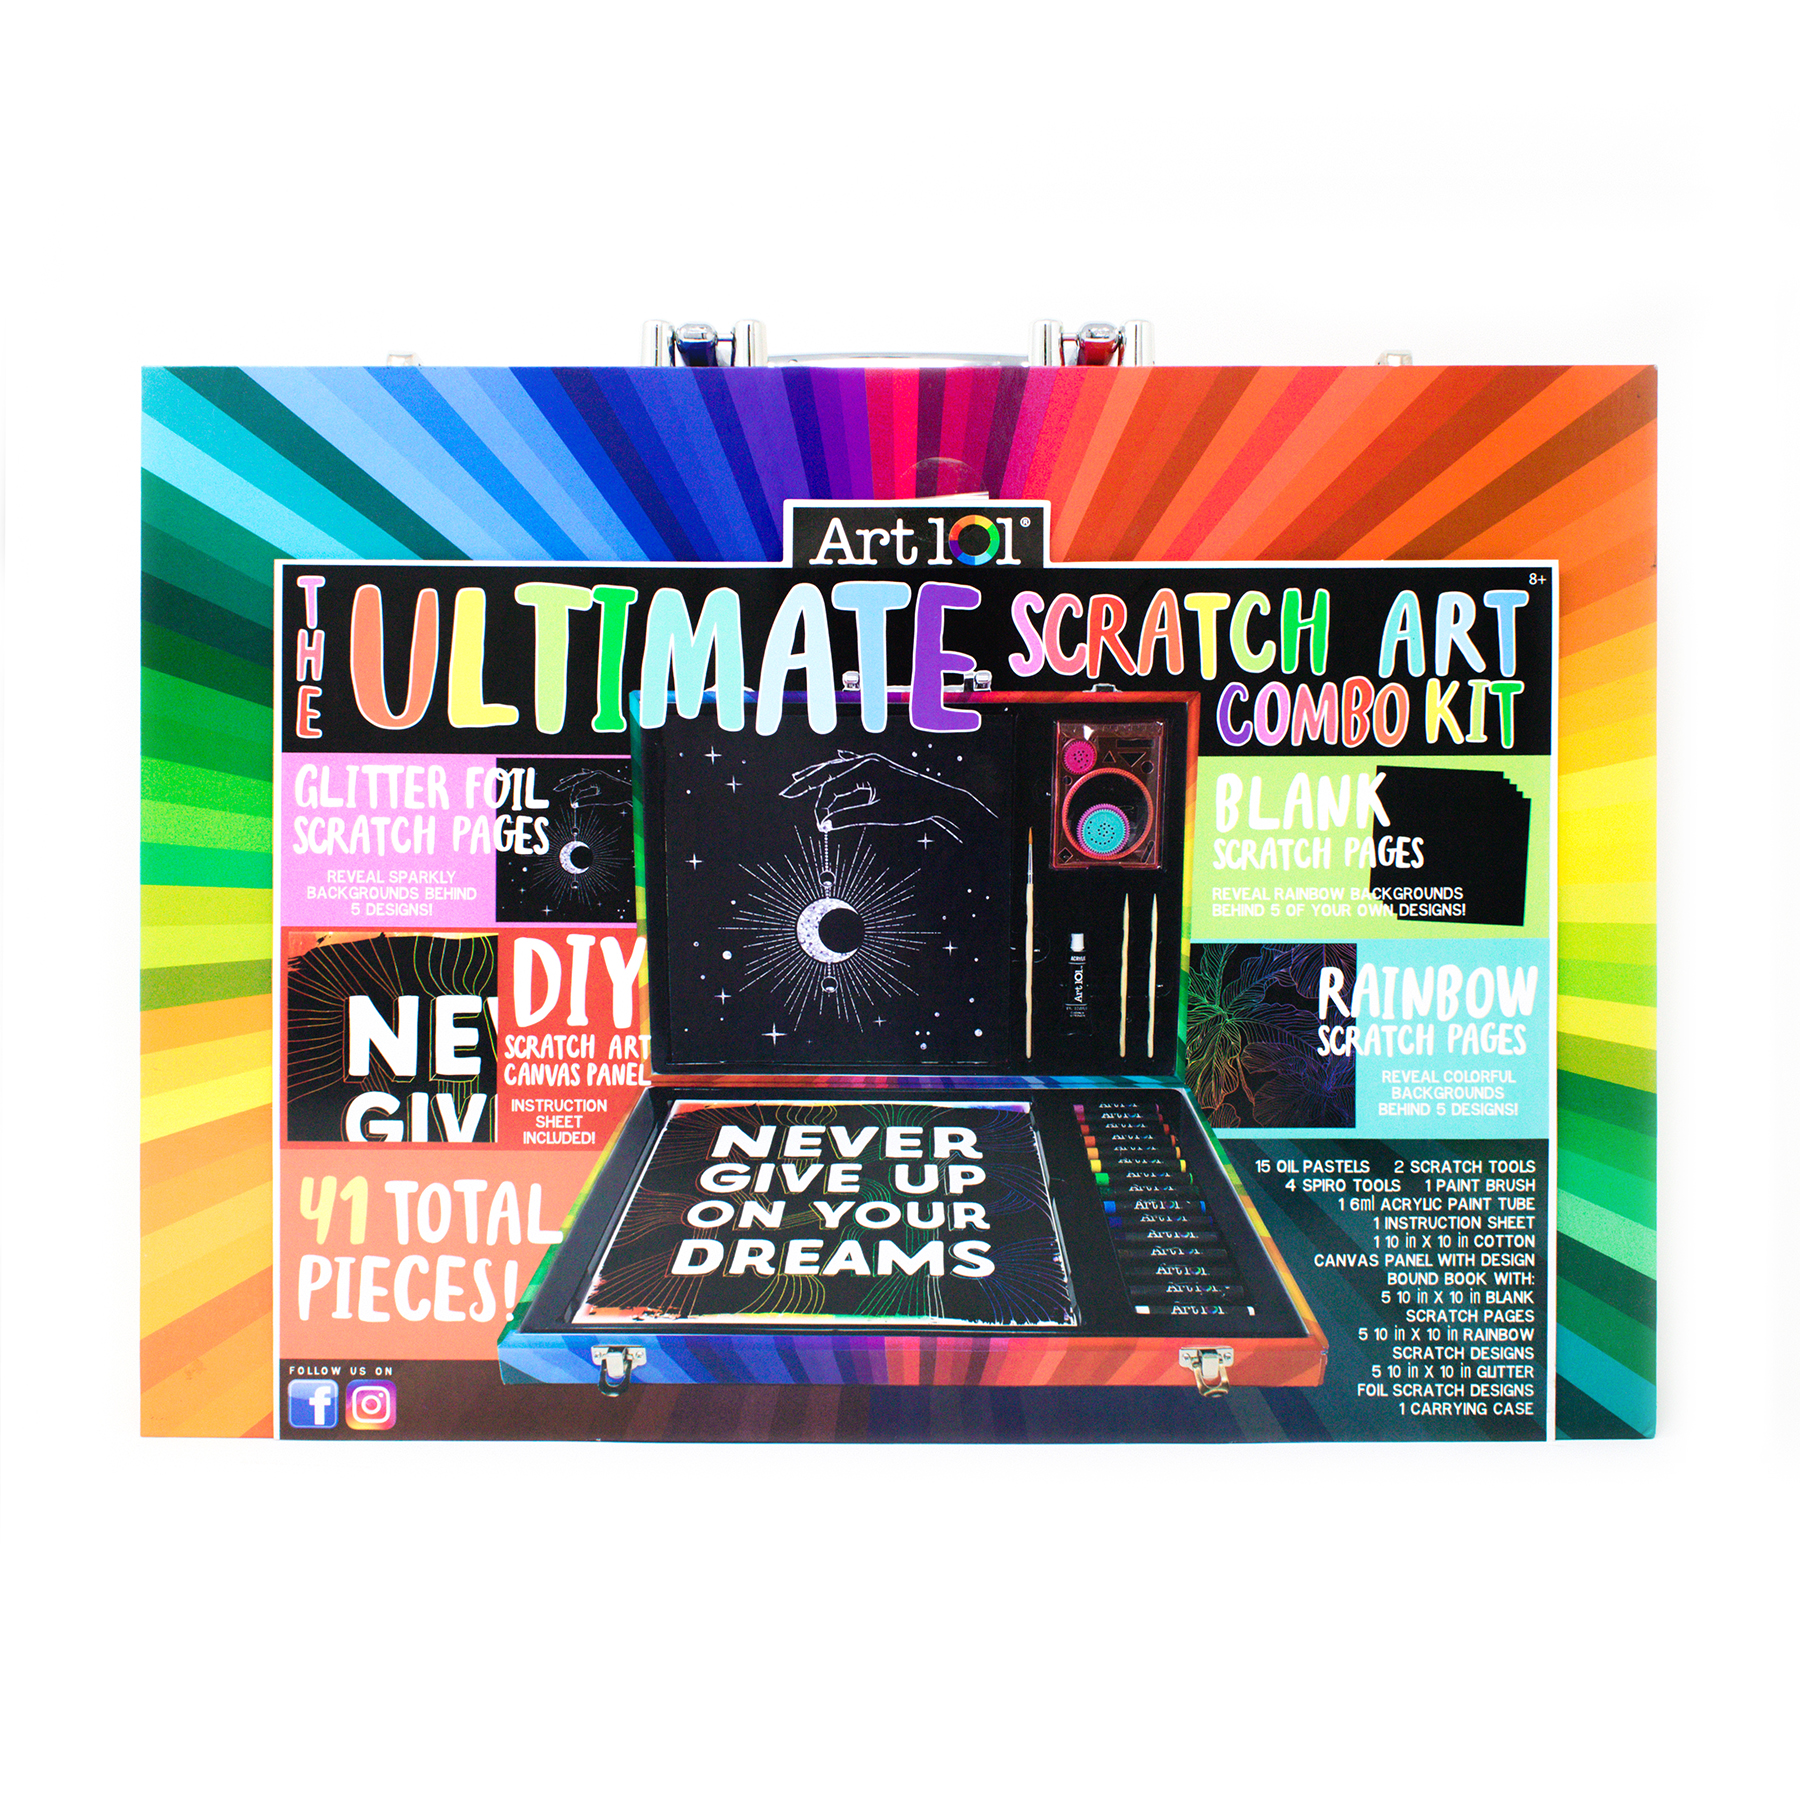 Art 101 Ultimate Scratch Art Combo Kit, 41 Pieces